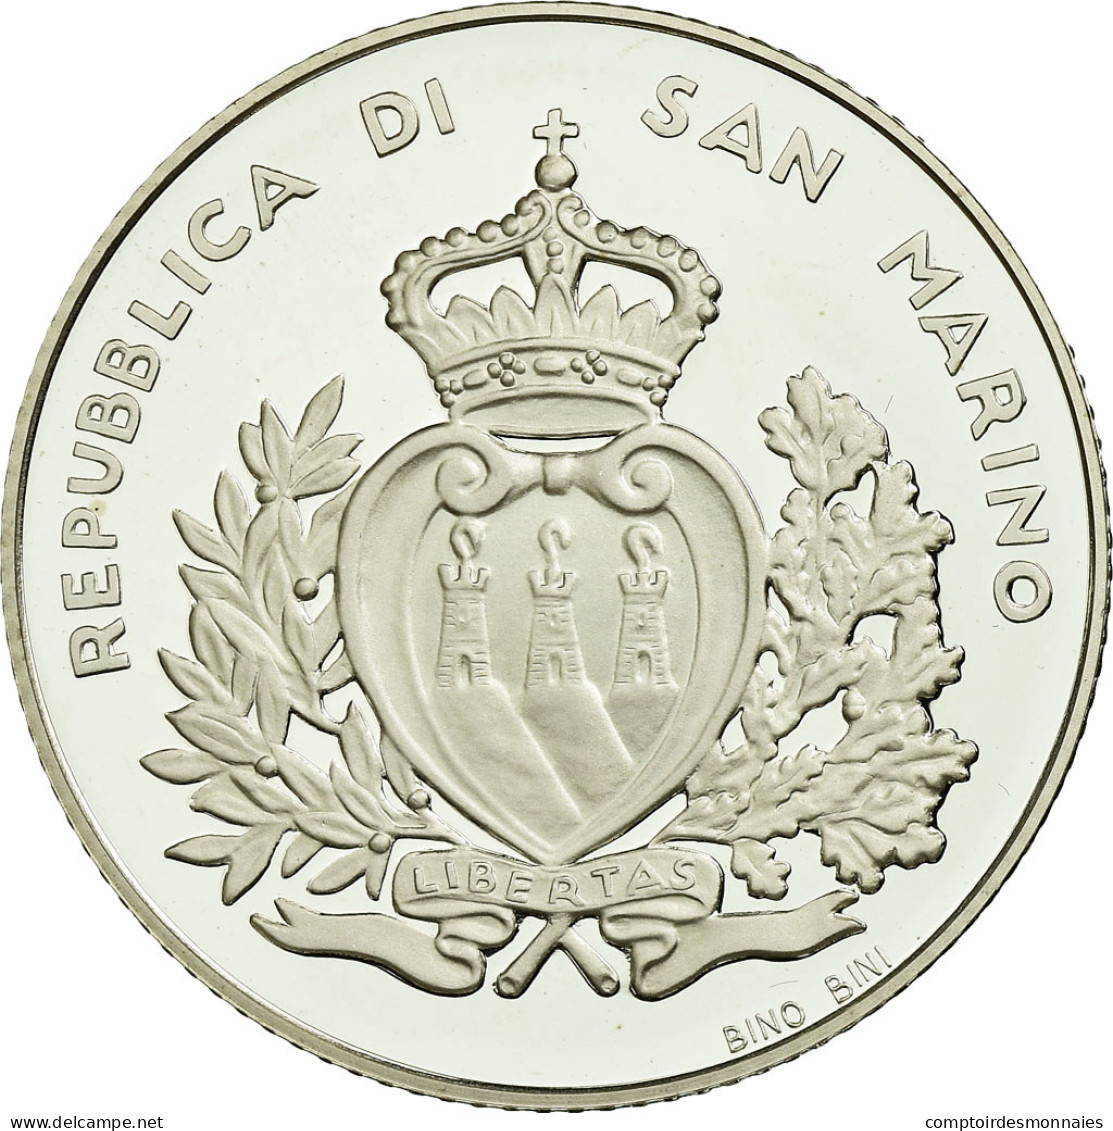 San Marino, 5 Euro, 2011, Proof, FDC, Argent, KM:501 - San Marino